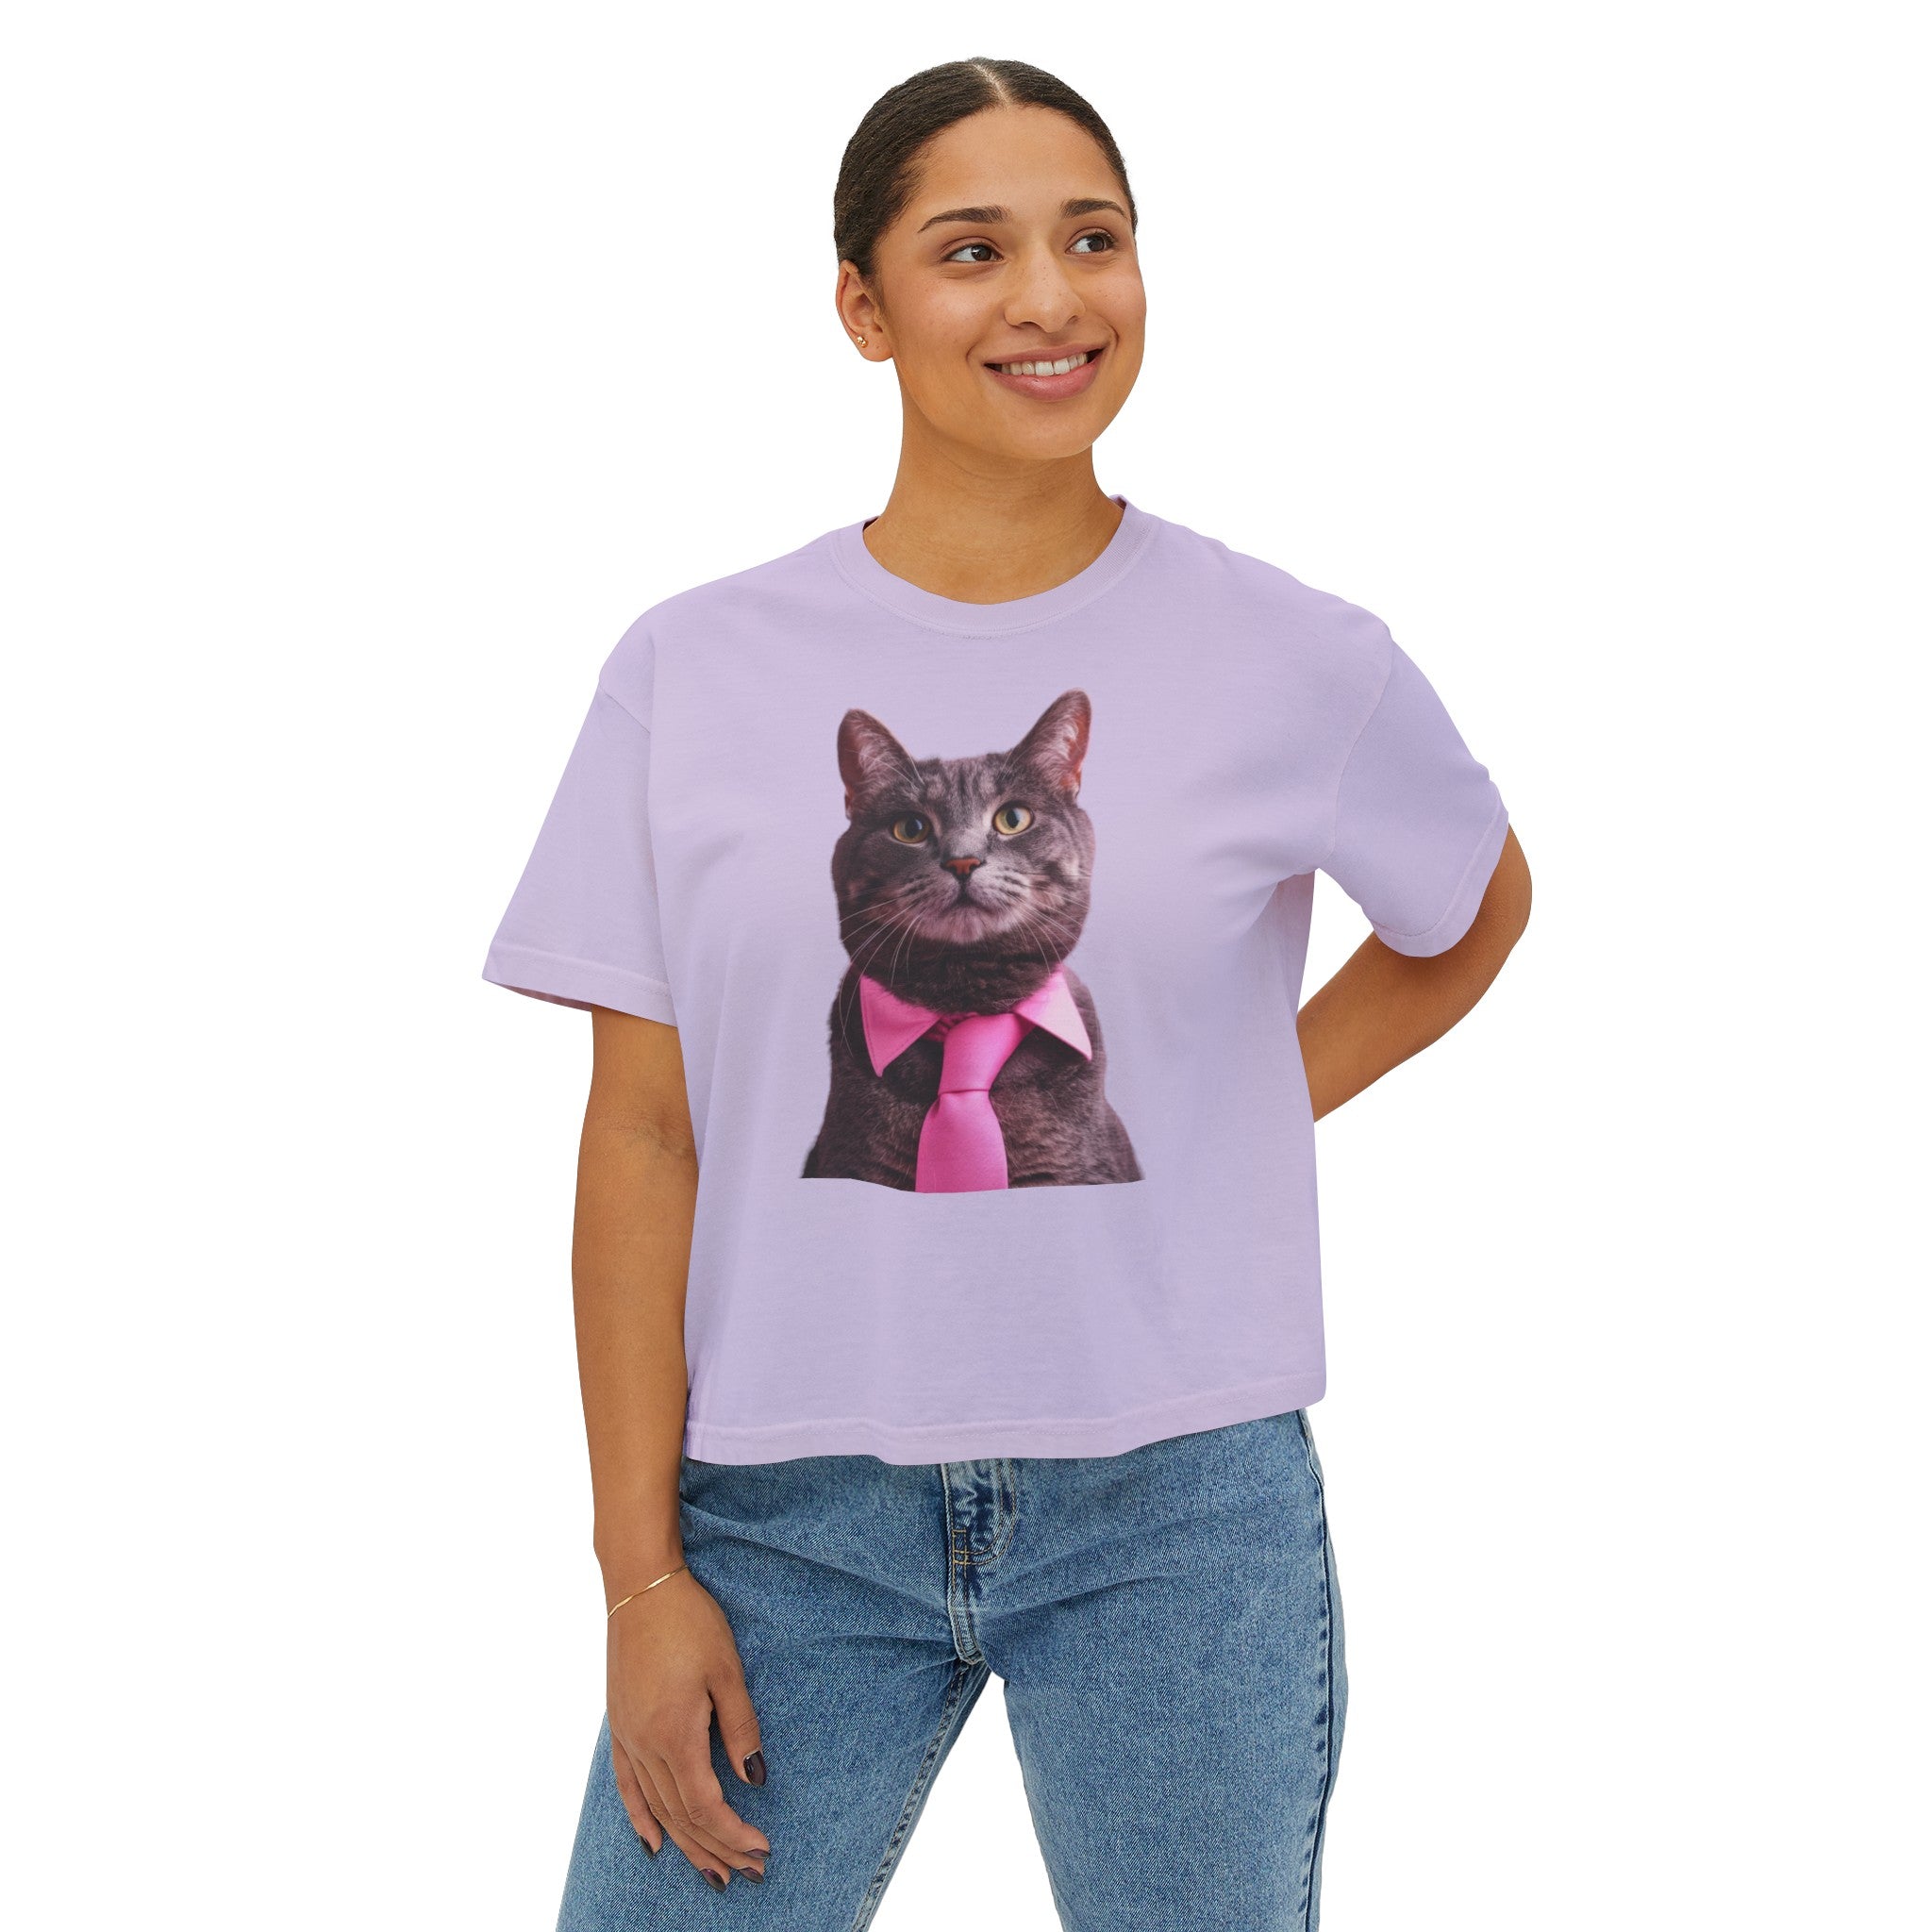 Purr-fectly Dapper: Pink Tie Tabby Cat Chic Women's Boxy Tee - Elegant Feline Fashion for the Modern Cat Lover